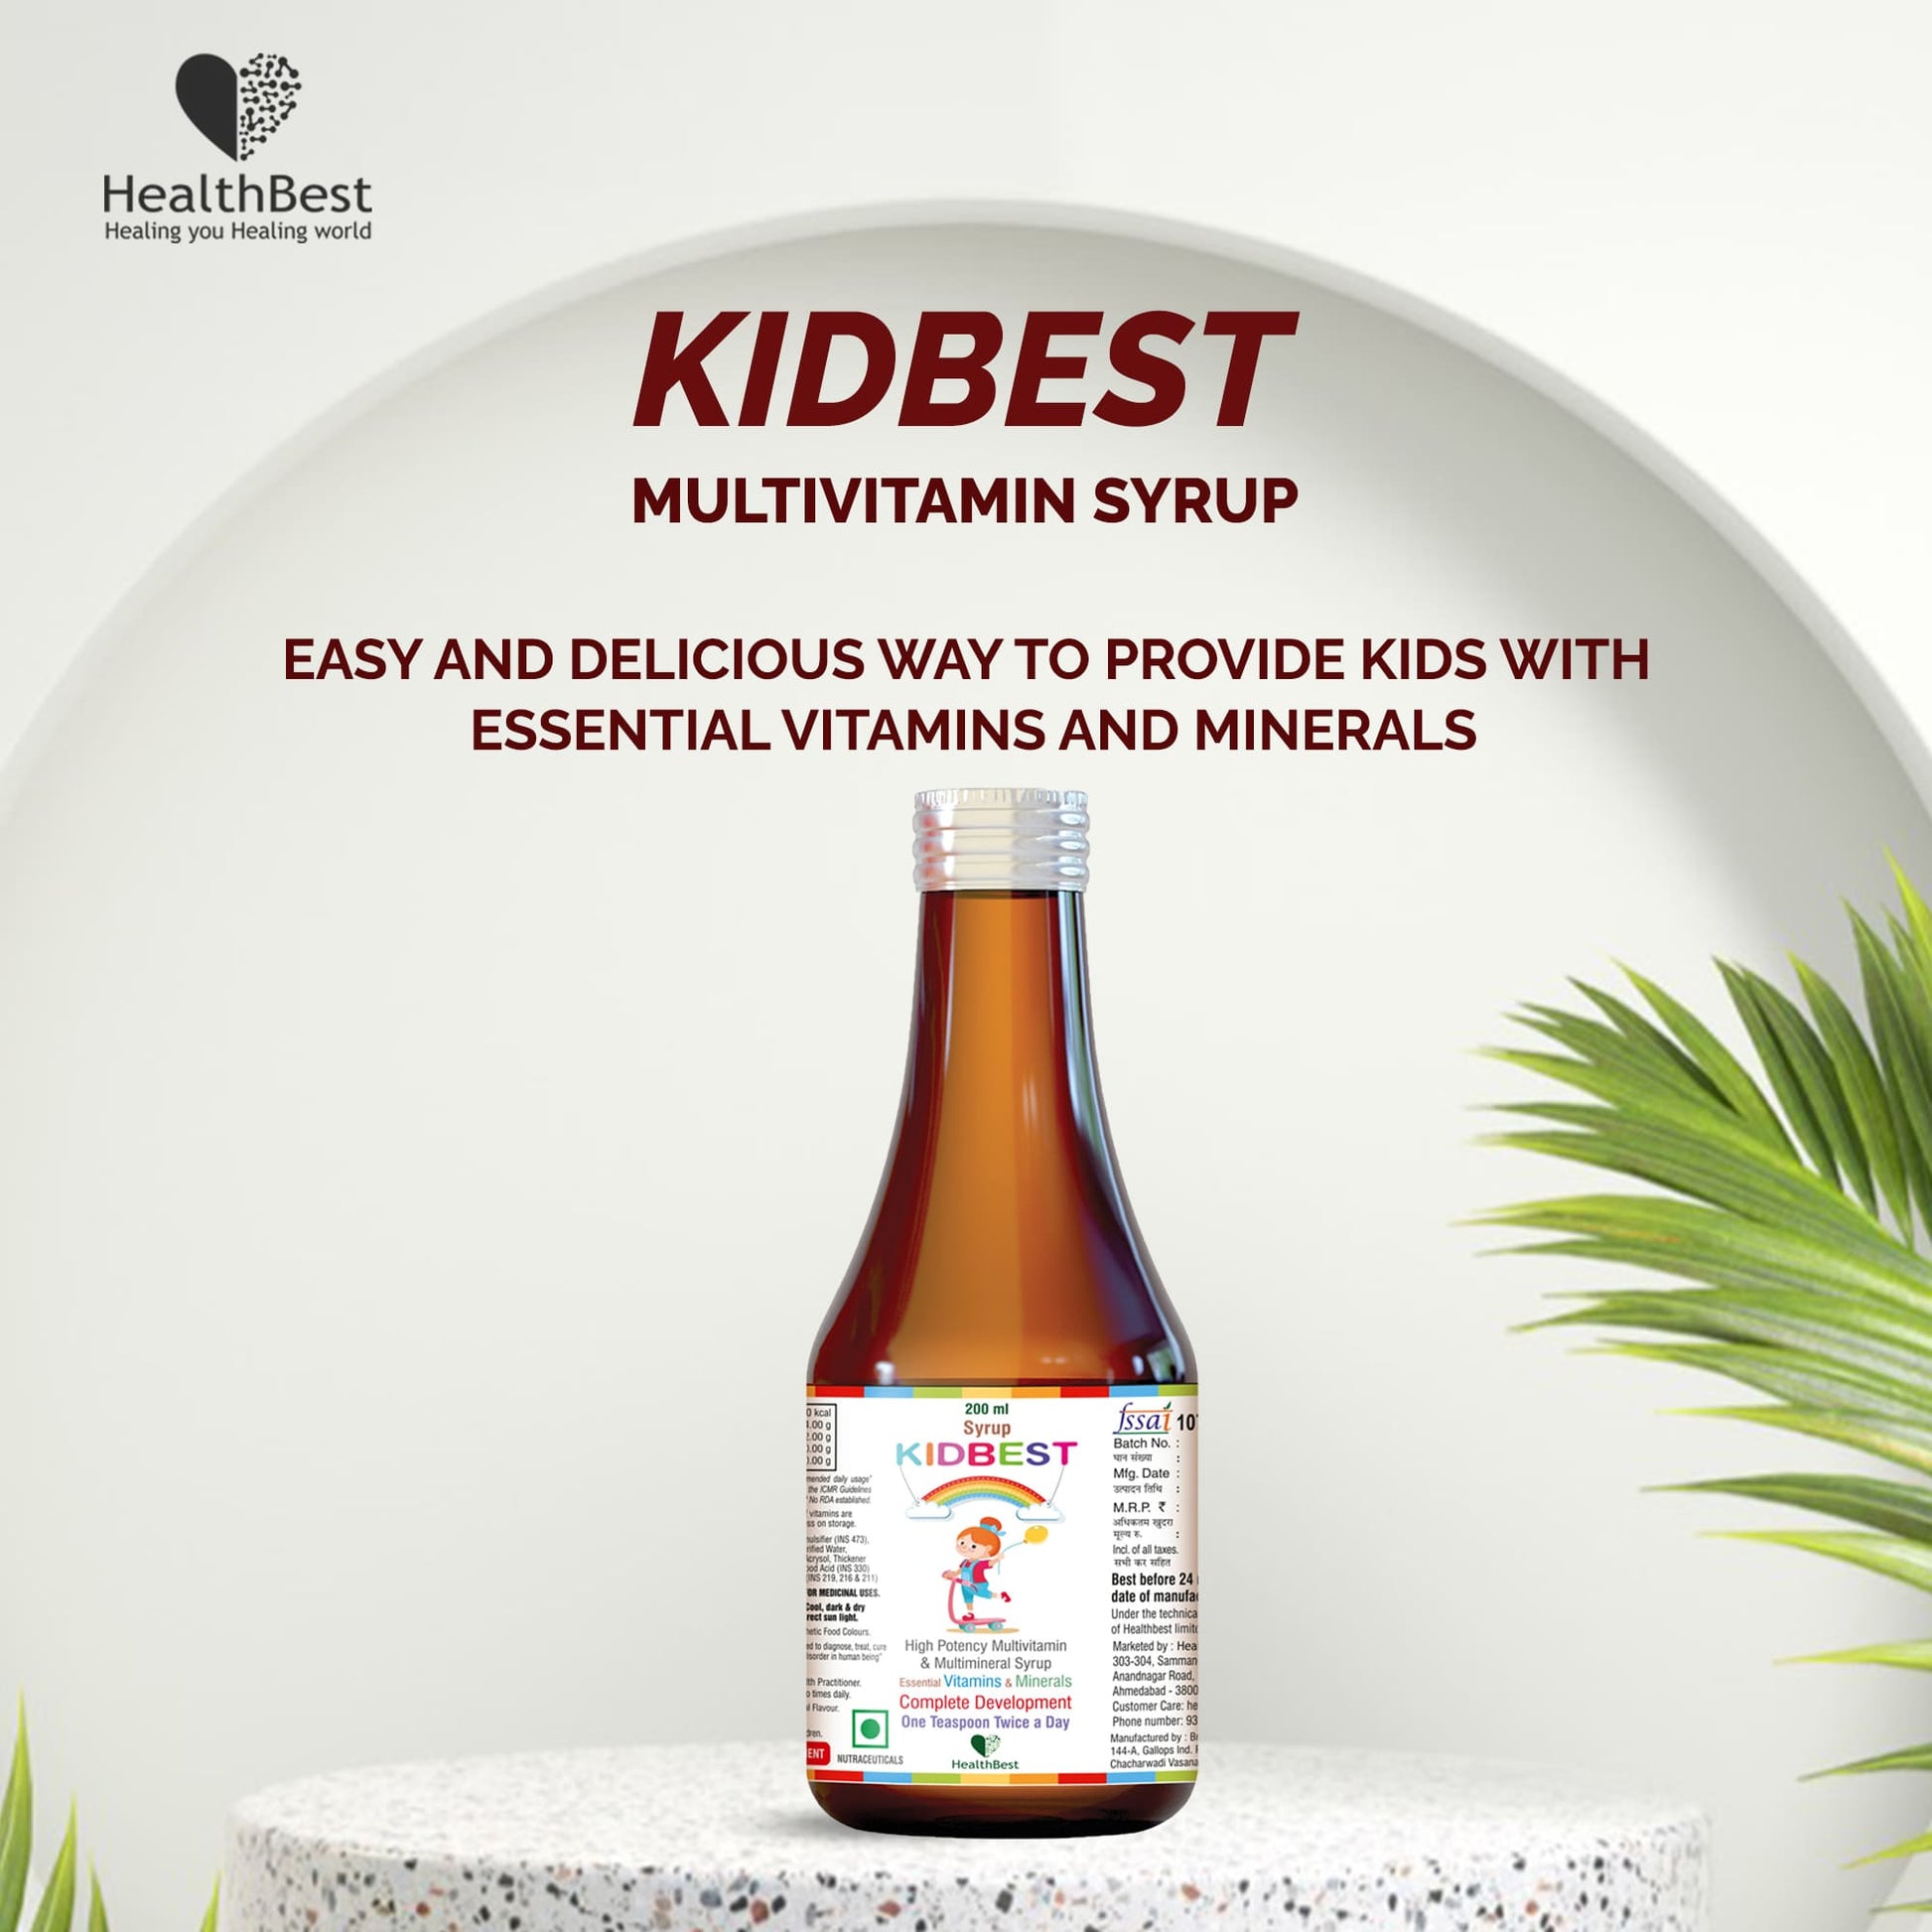 Healtbest Kidbest Multivitamin1 Syrup for Kids